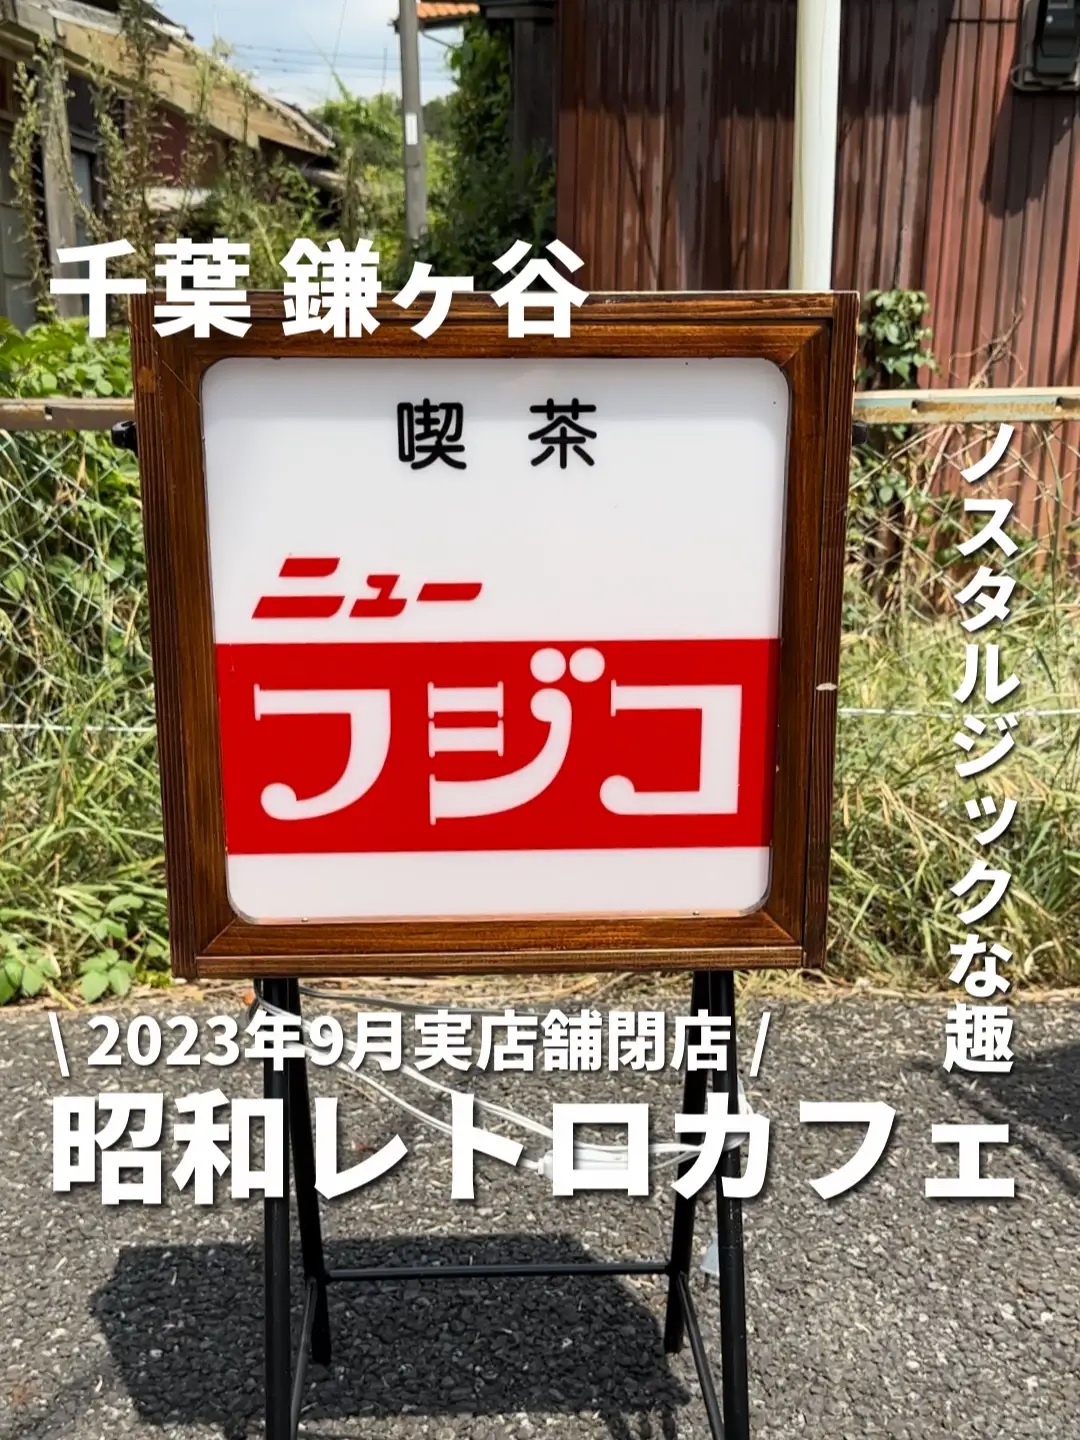 【 Chiba 】 Showa Retro Cafe will close in September 2023!